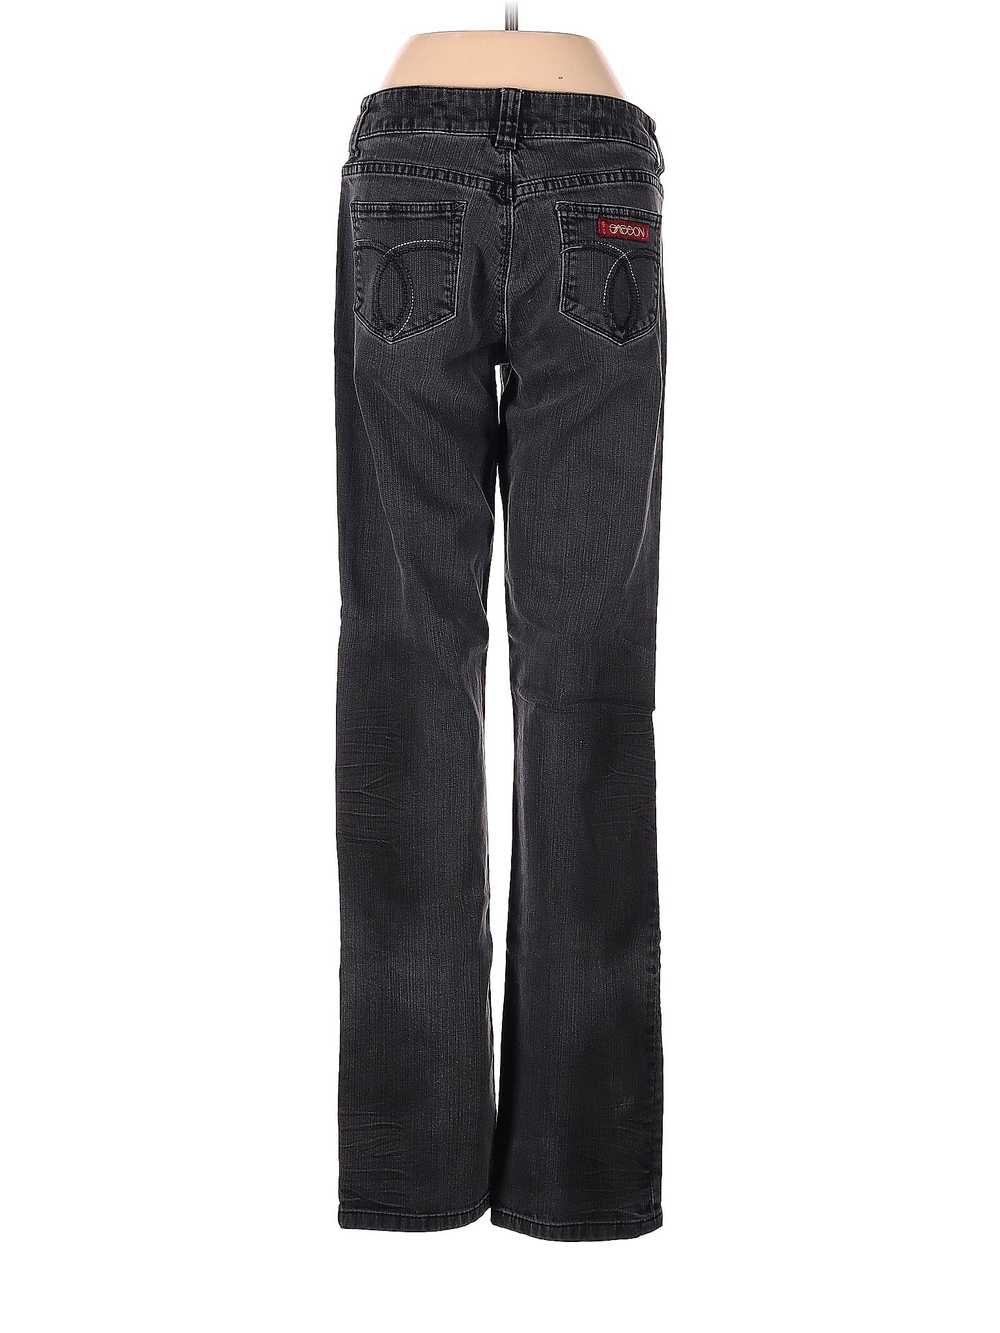 Ooh La La Women Black Jeans 4 - image 2